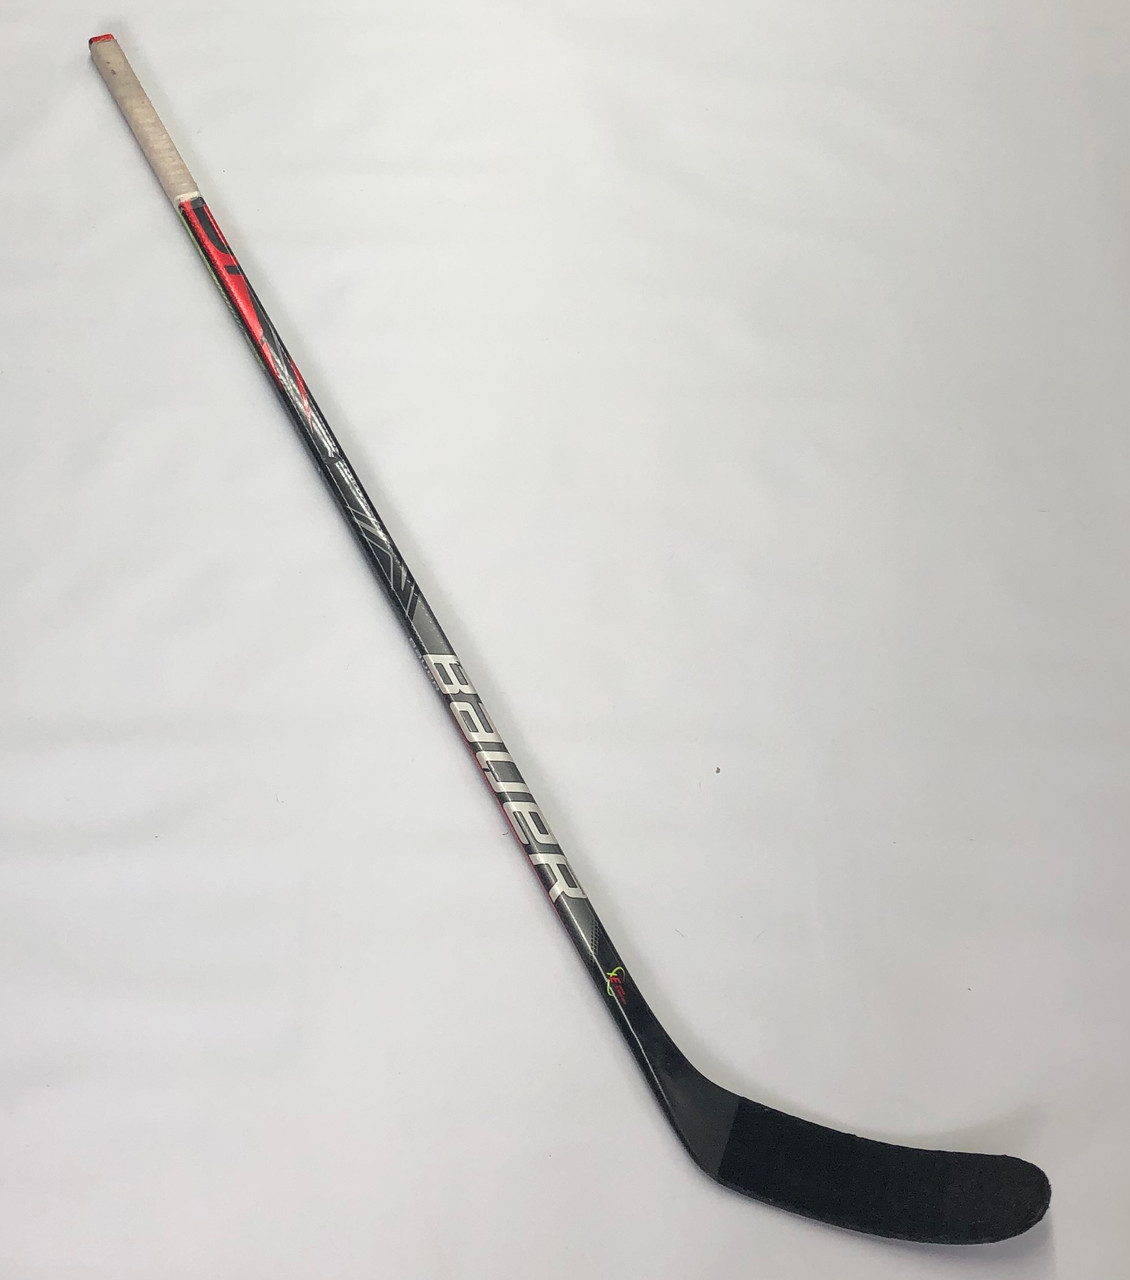 Refurb* Bauer Vapor Flylite LH Pro Stock Stick Grip Used P28 82 Flex ITH -  DK's Hockey Shop